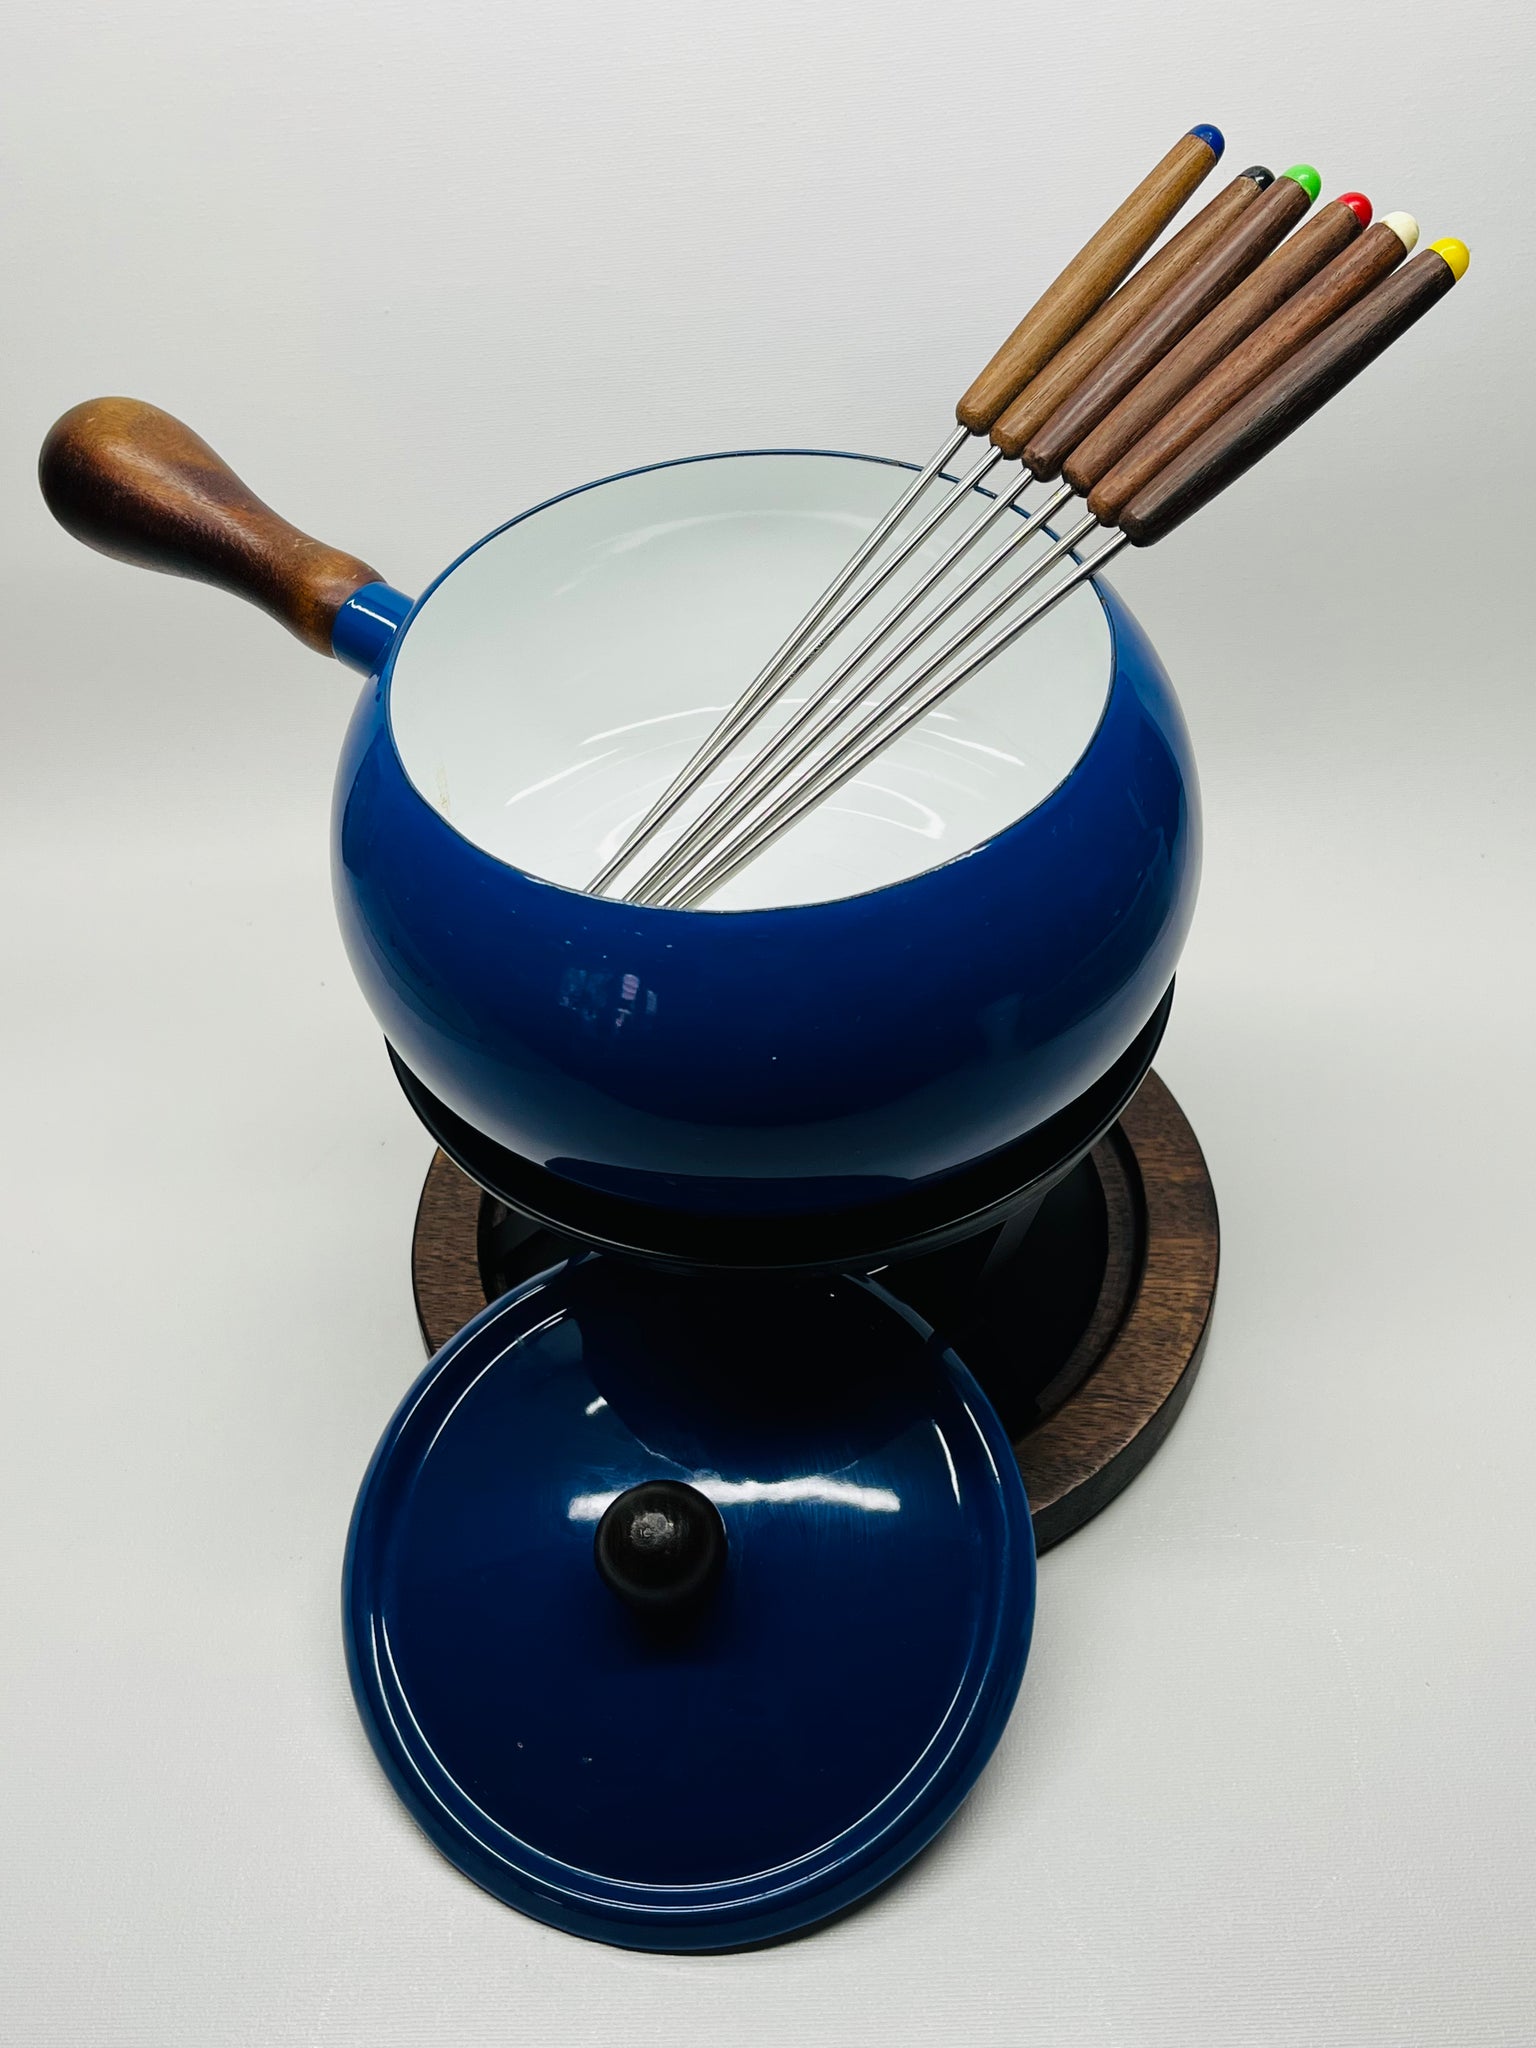 Blue Fondue Pot with Forks